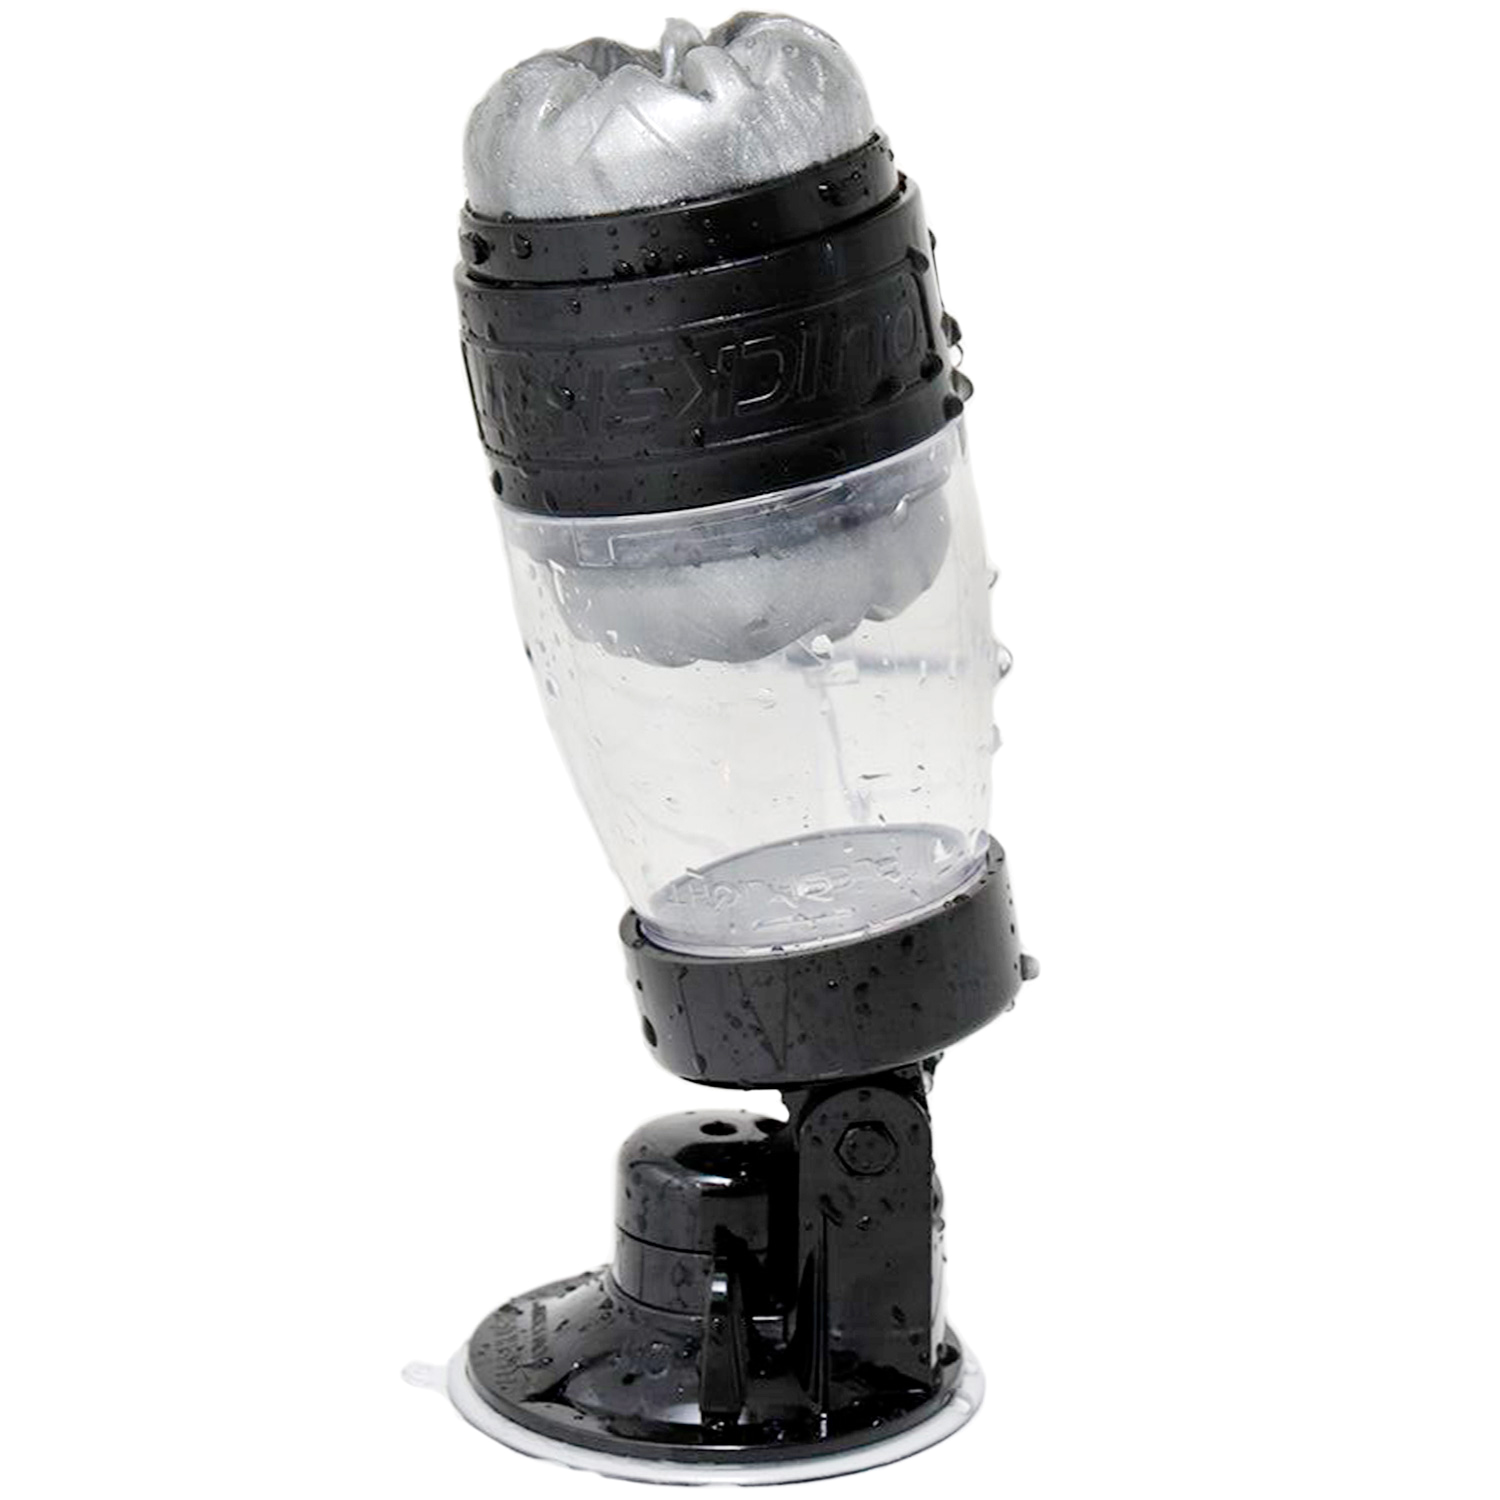 Fleshlight Quickshot Shower Mount Adapter - Clear